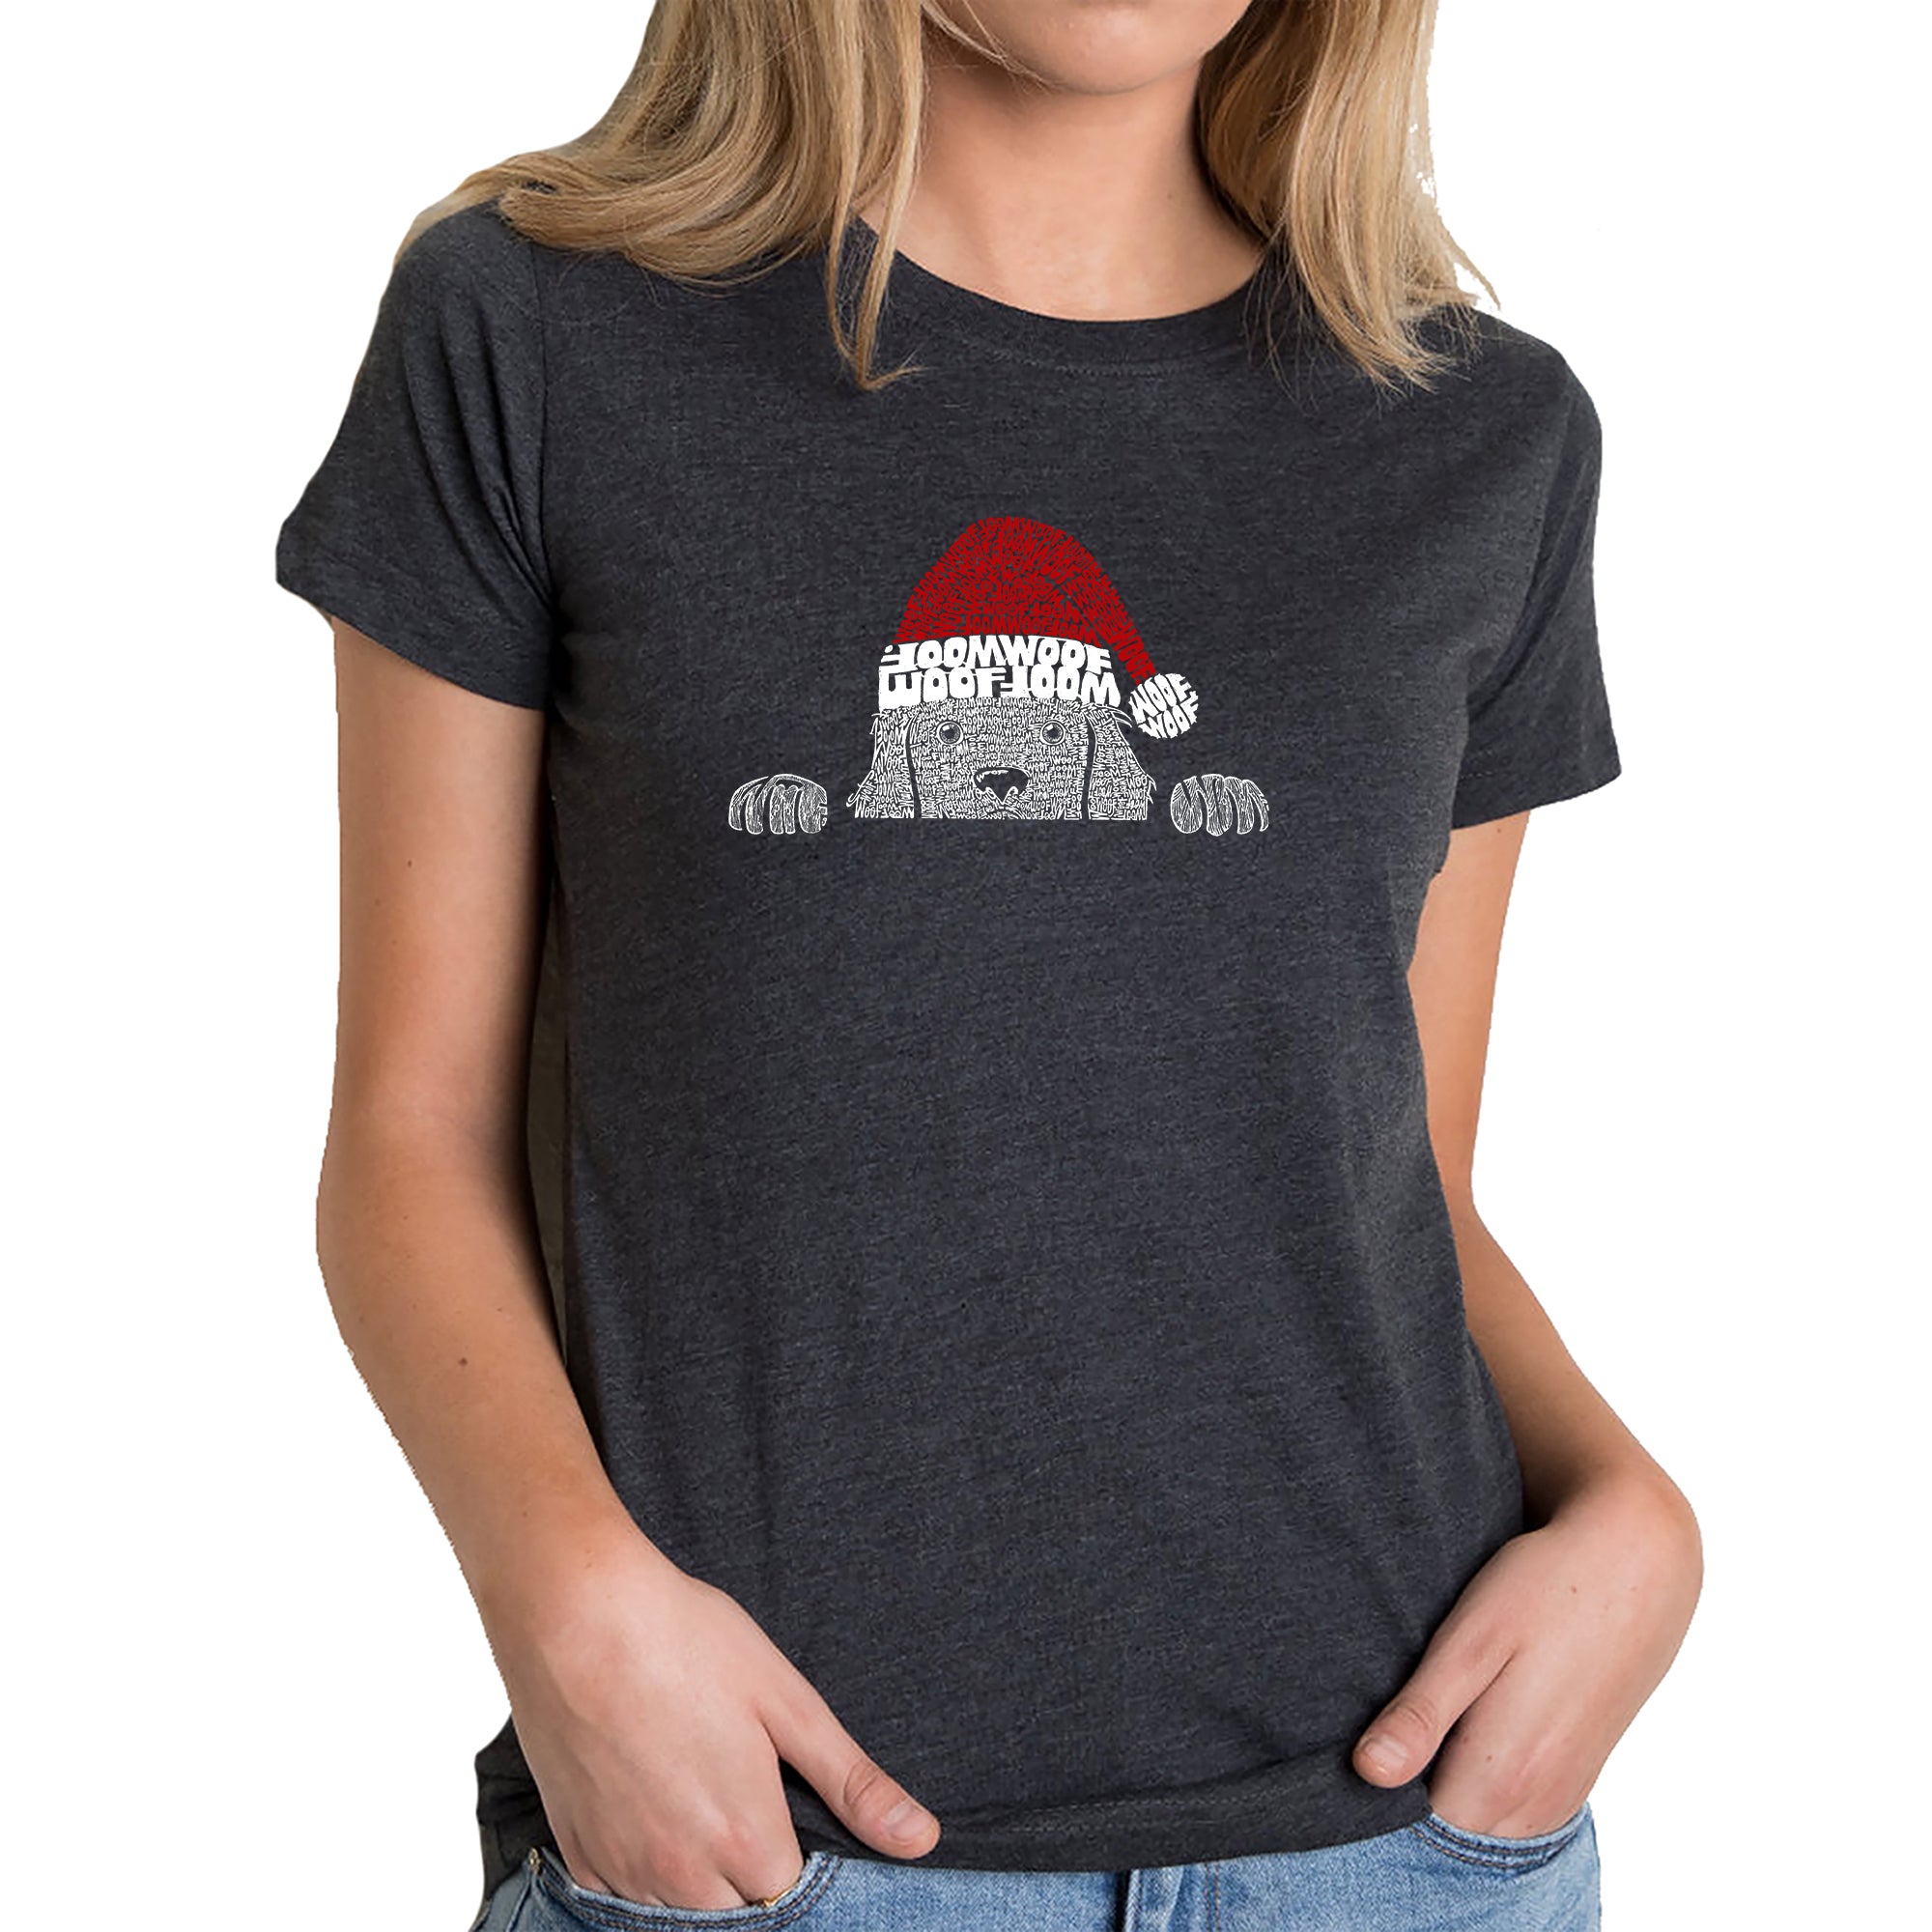 Christmas Peeking Dog - Women's Premium Blend Word Art T-Shirt - Turquoise - XX-Large